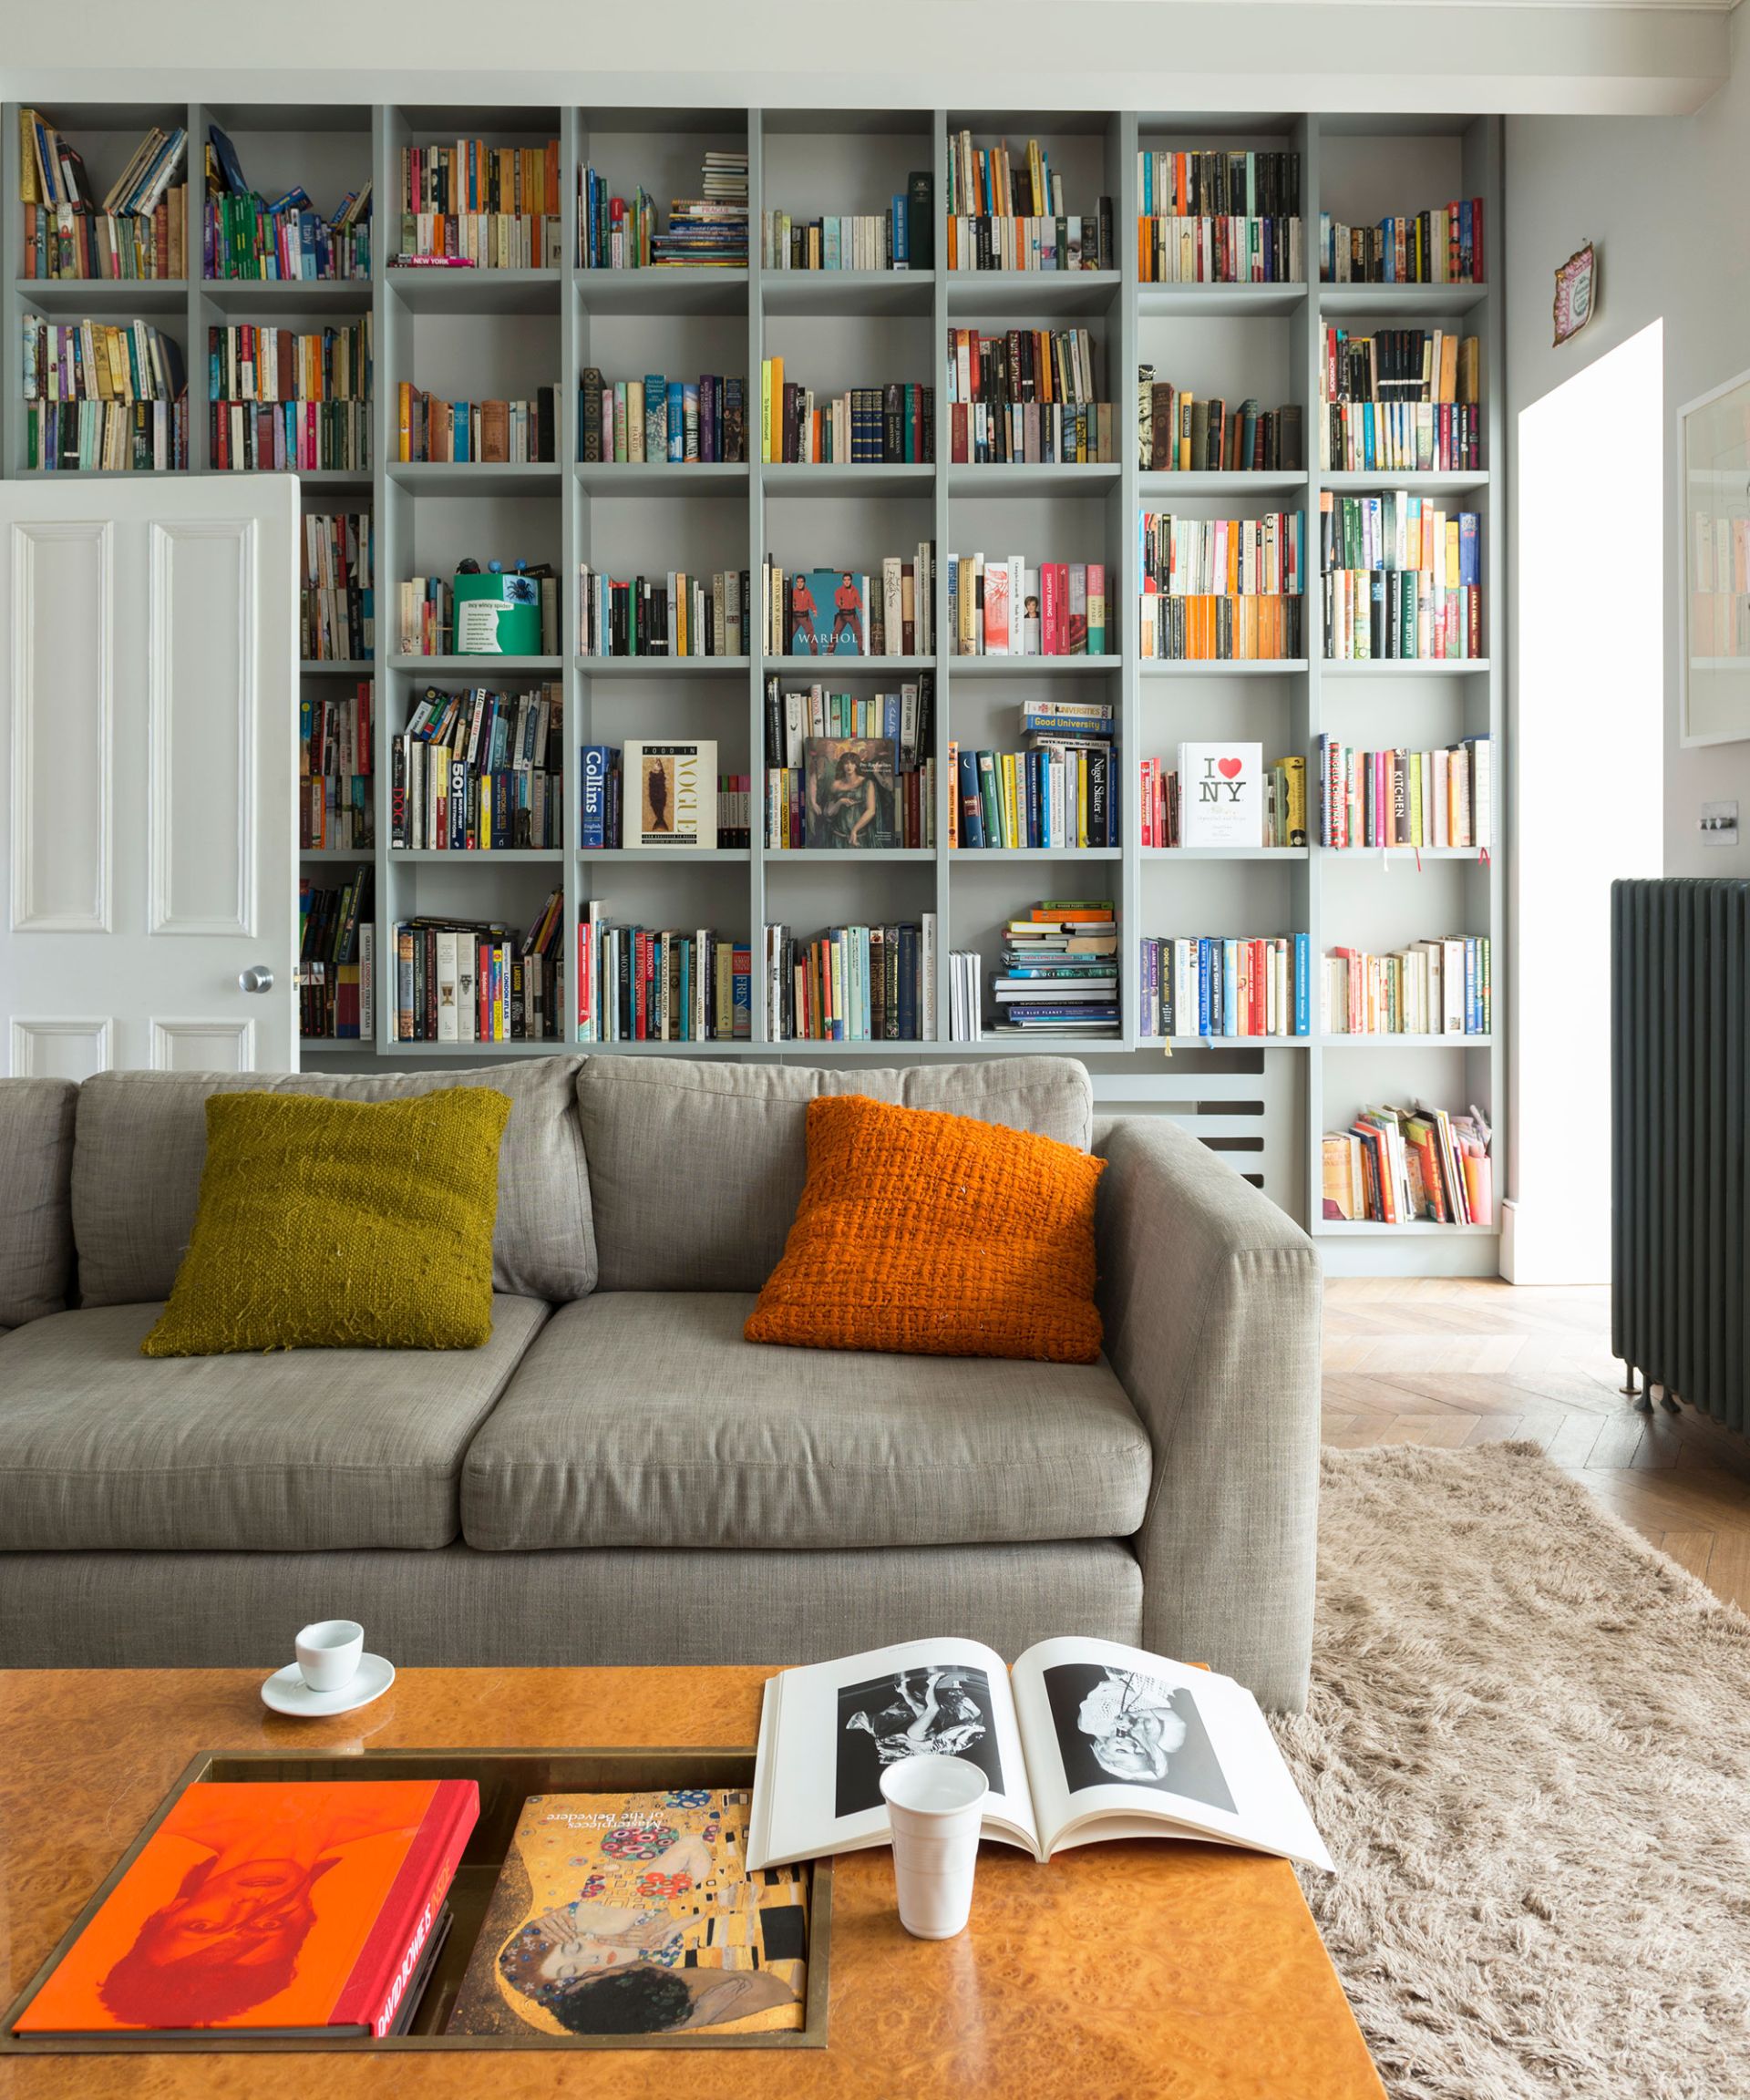 Living room shelving ideas – 16 beautiful ways to display books ...